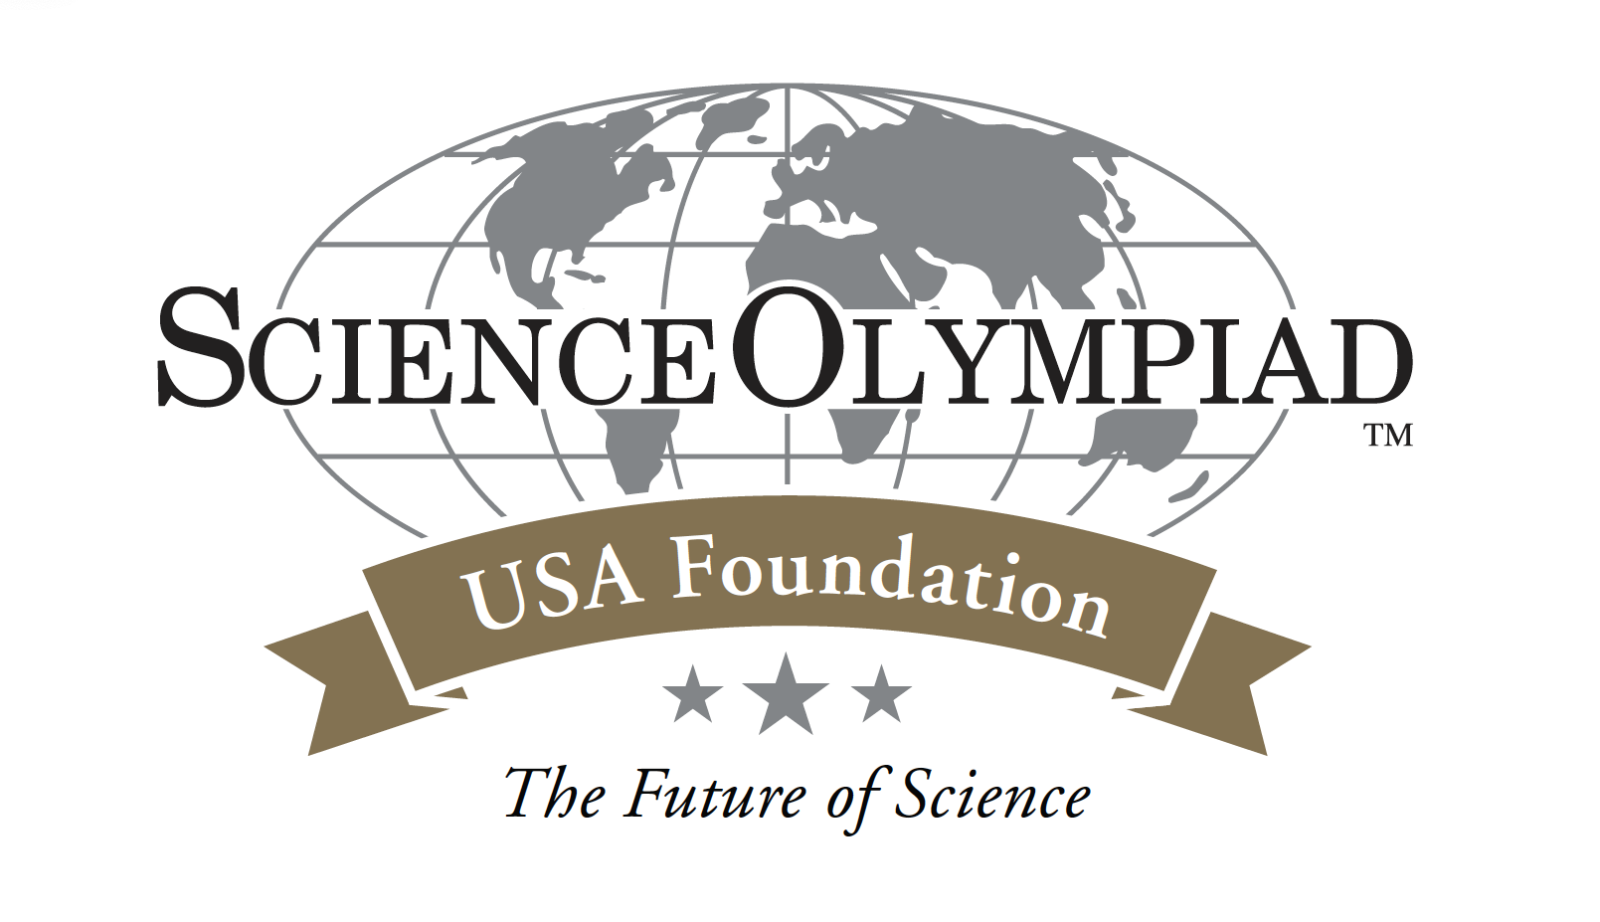 SO_USA_Foundation_logo.png